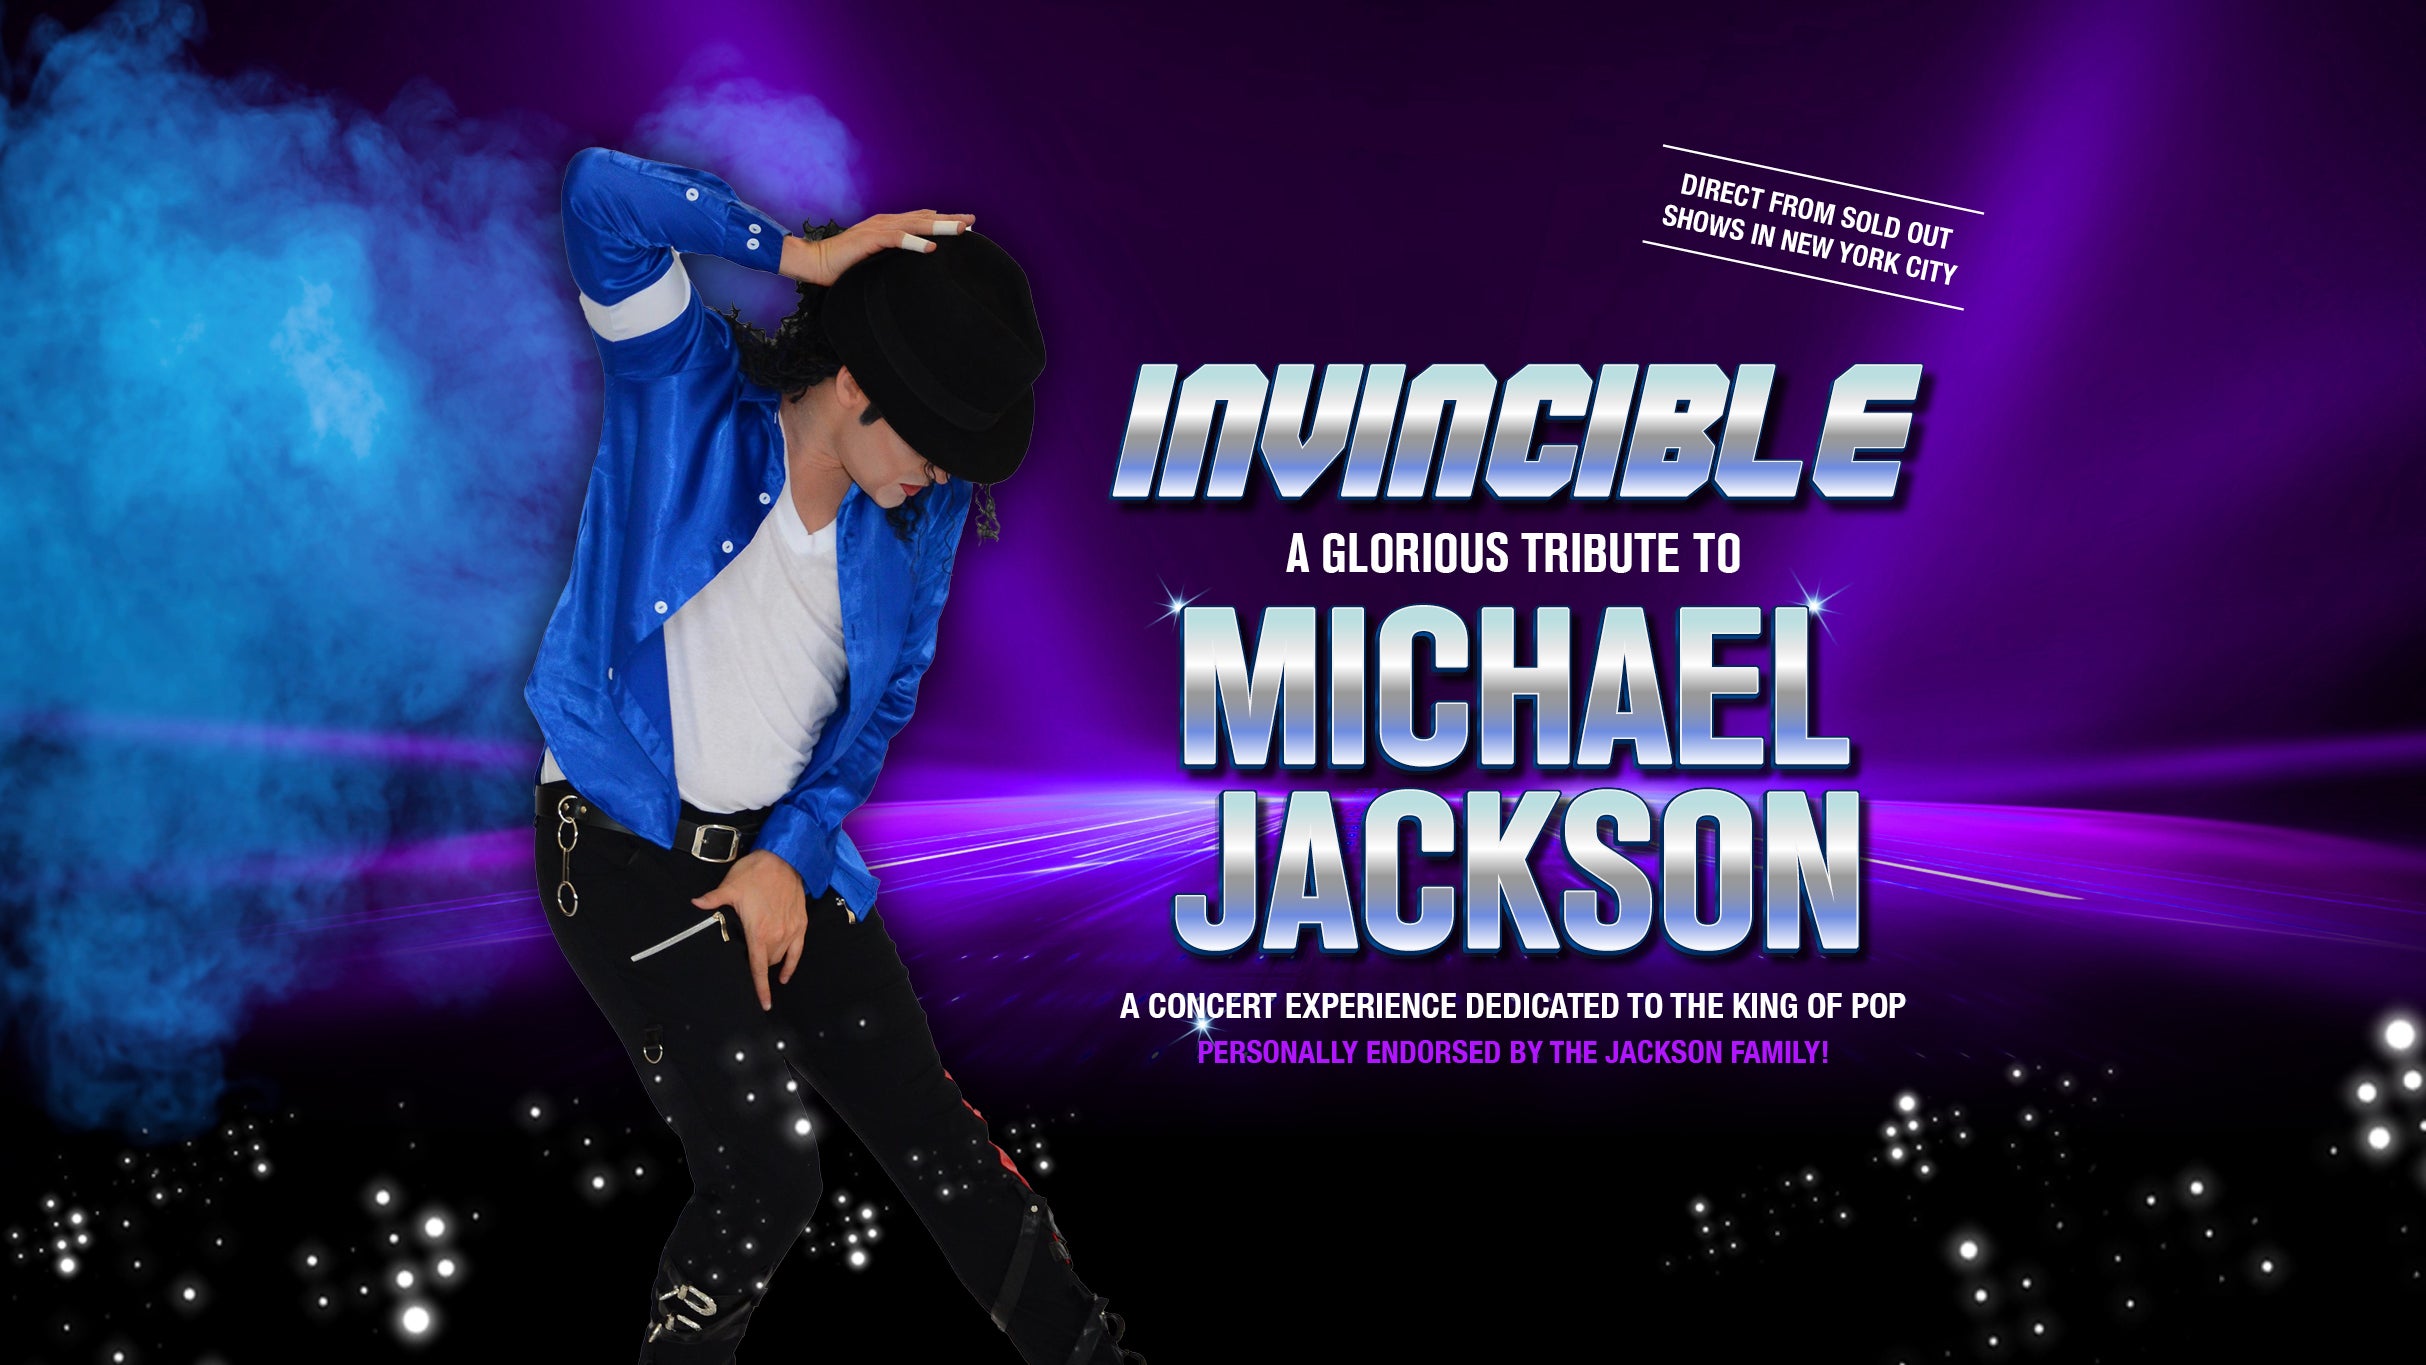 INVINCIBLE A Glorious Tribute to Michael Jackson presale information on freepresalepasswords.com